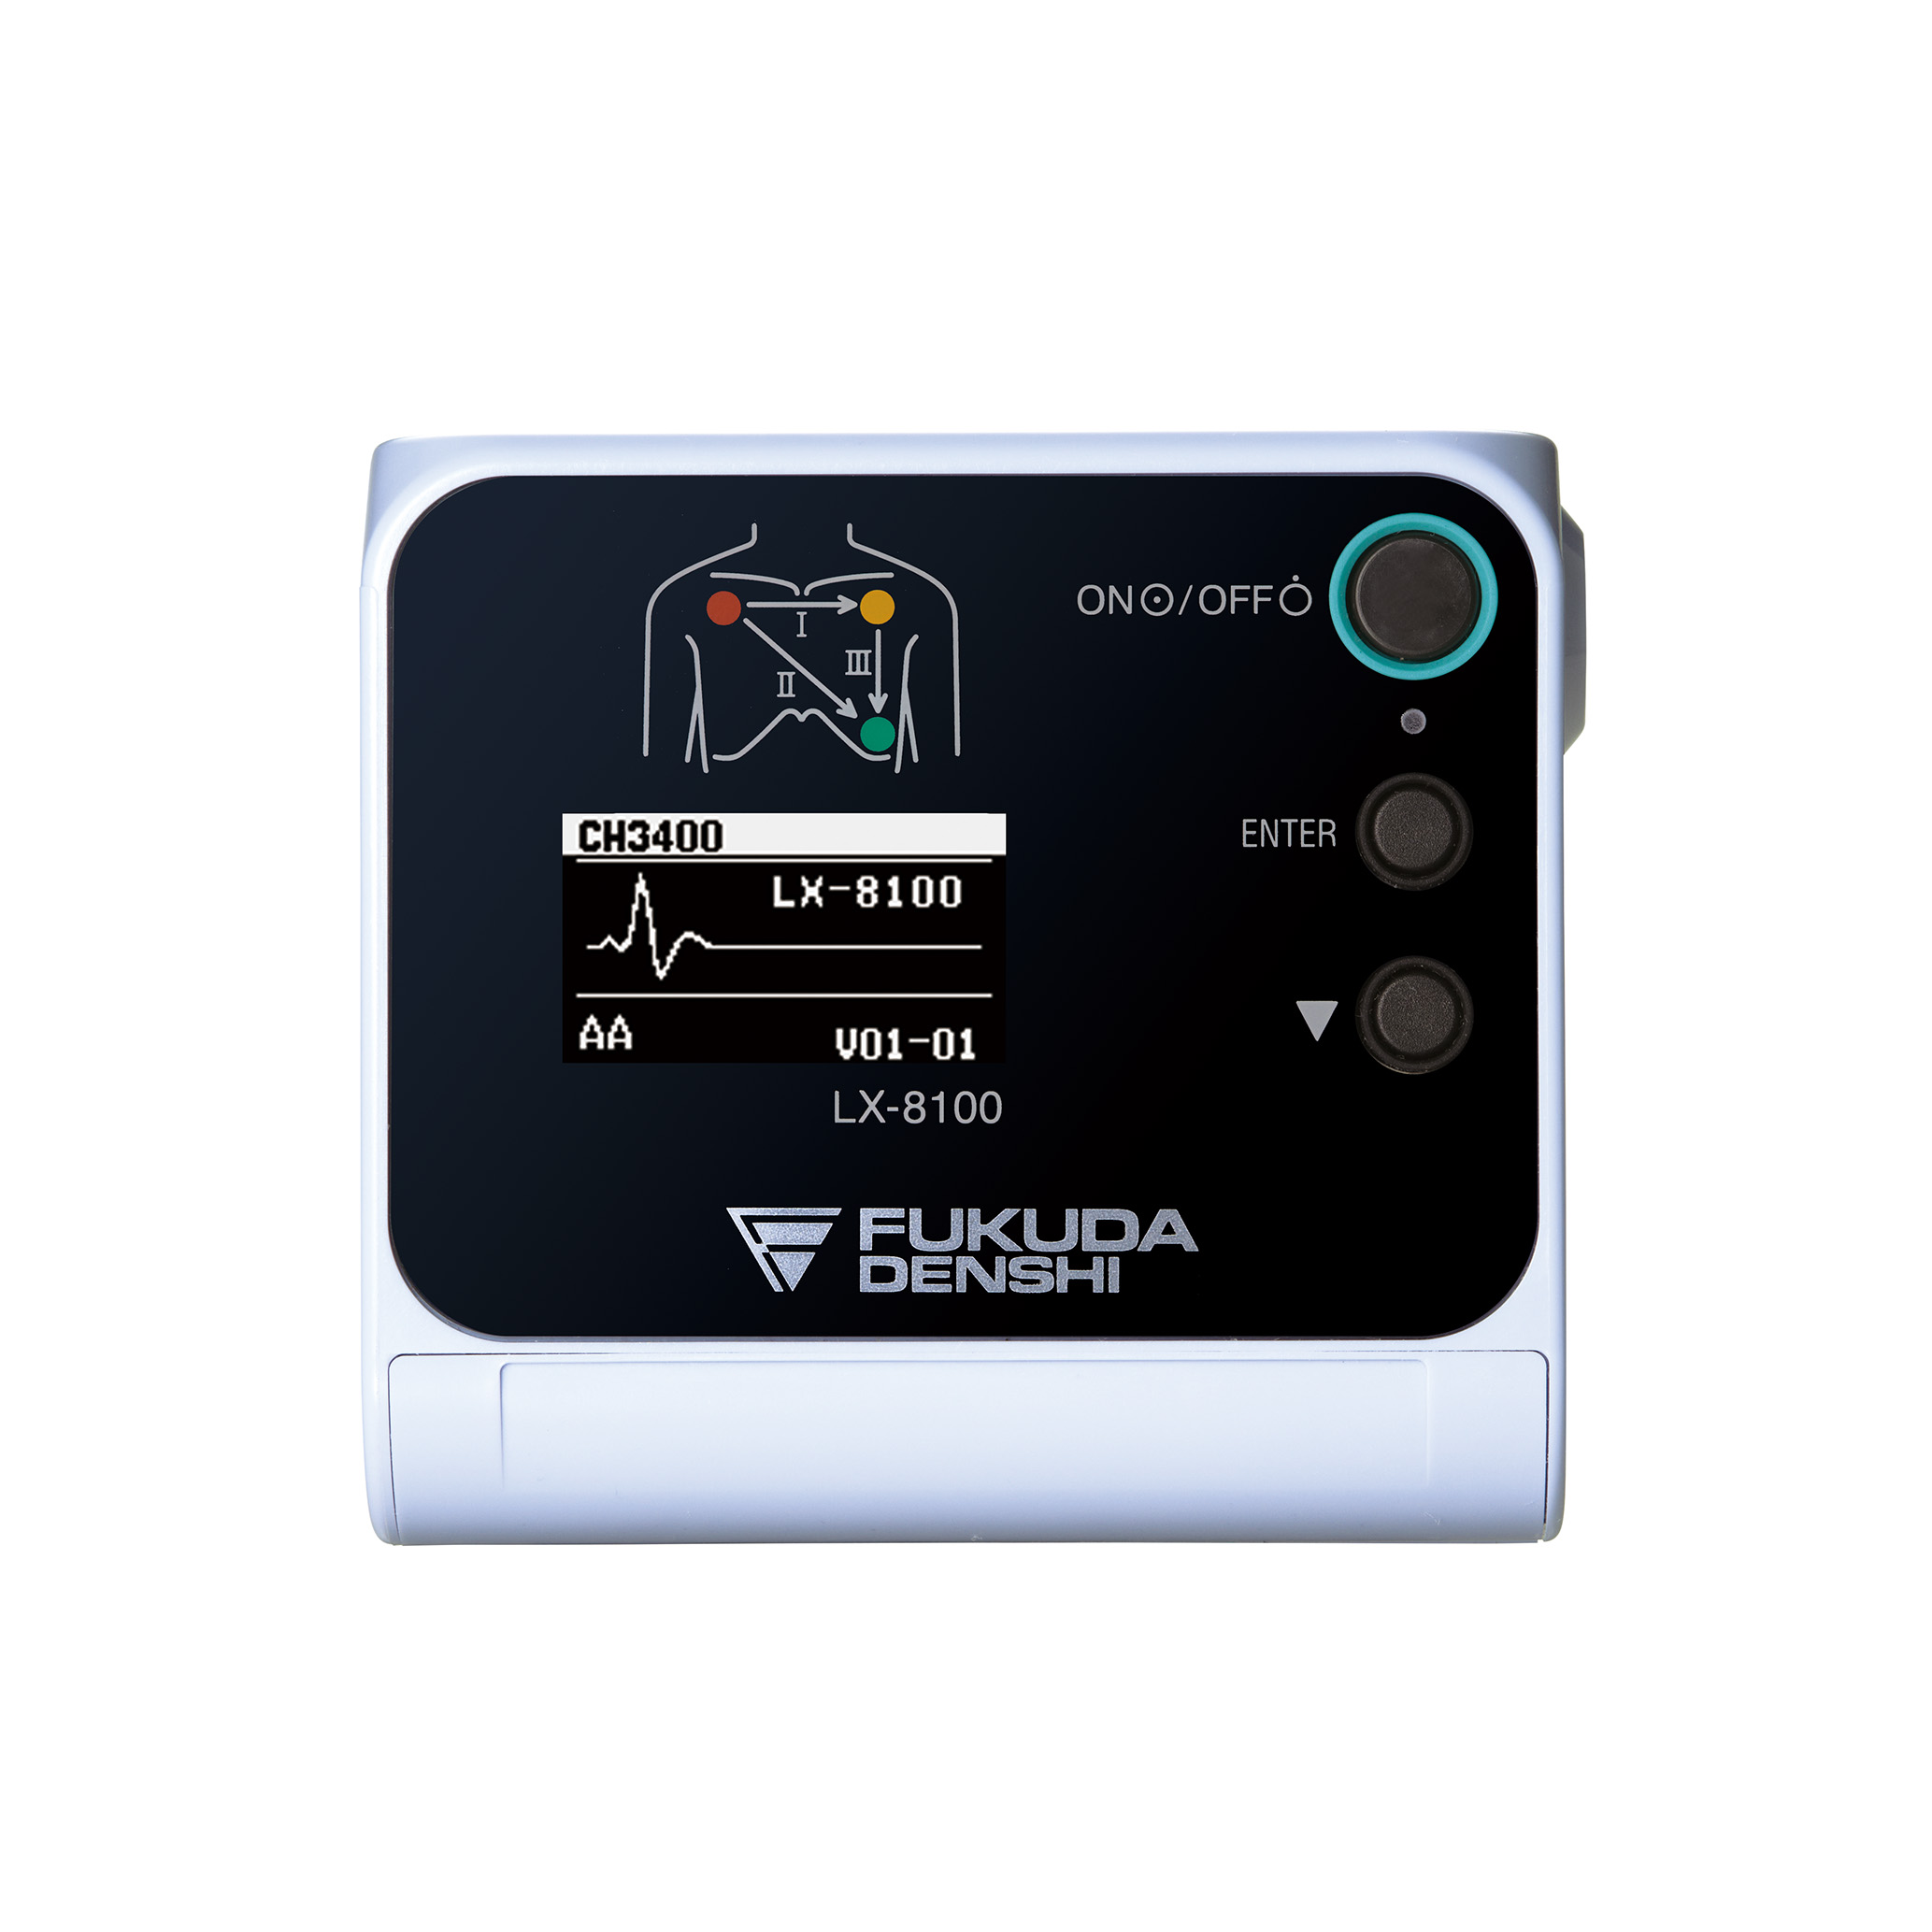 Product - LX-8100 - Telemetry Monitoring | Fukuda Denshi UK